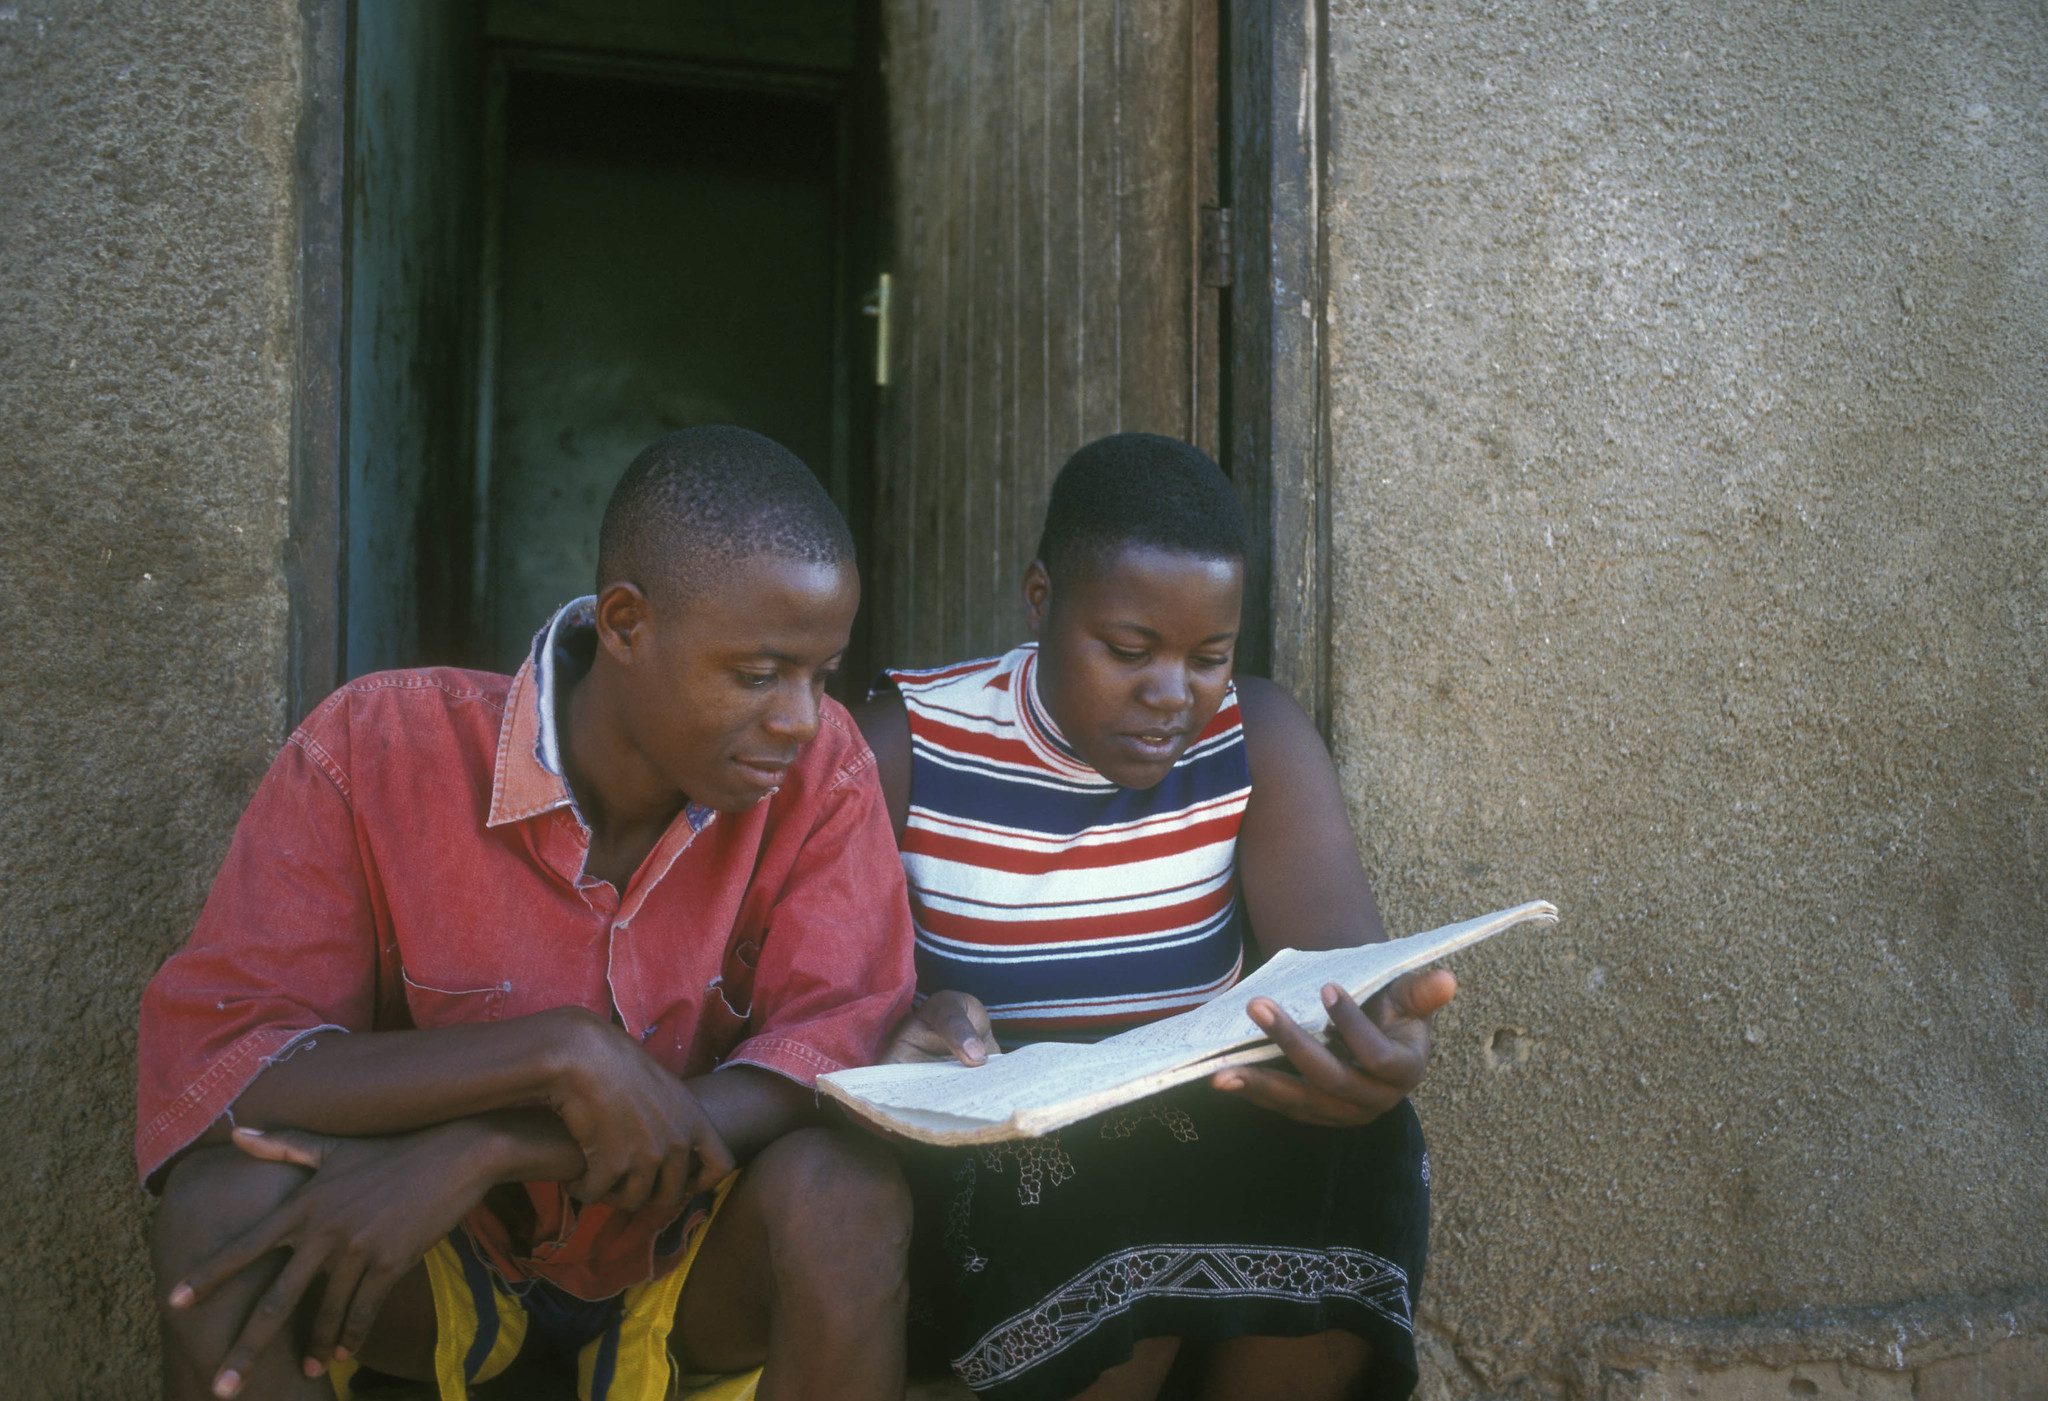 Teenage girl and boy in Uganda, looking at text book